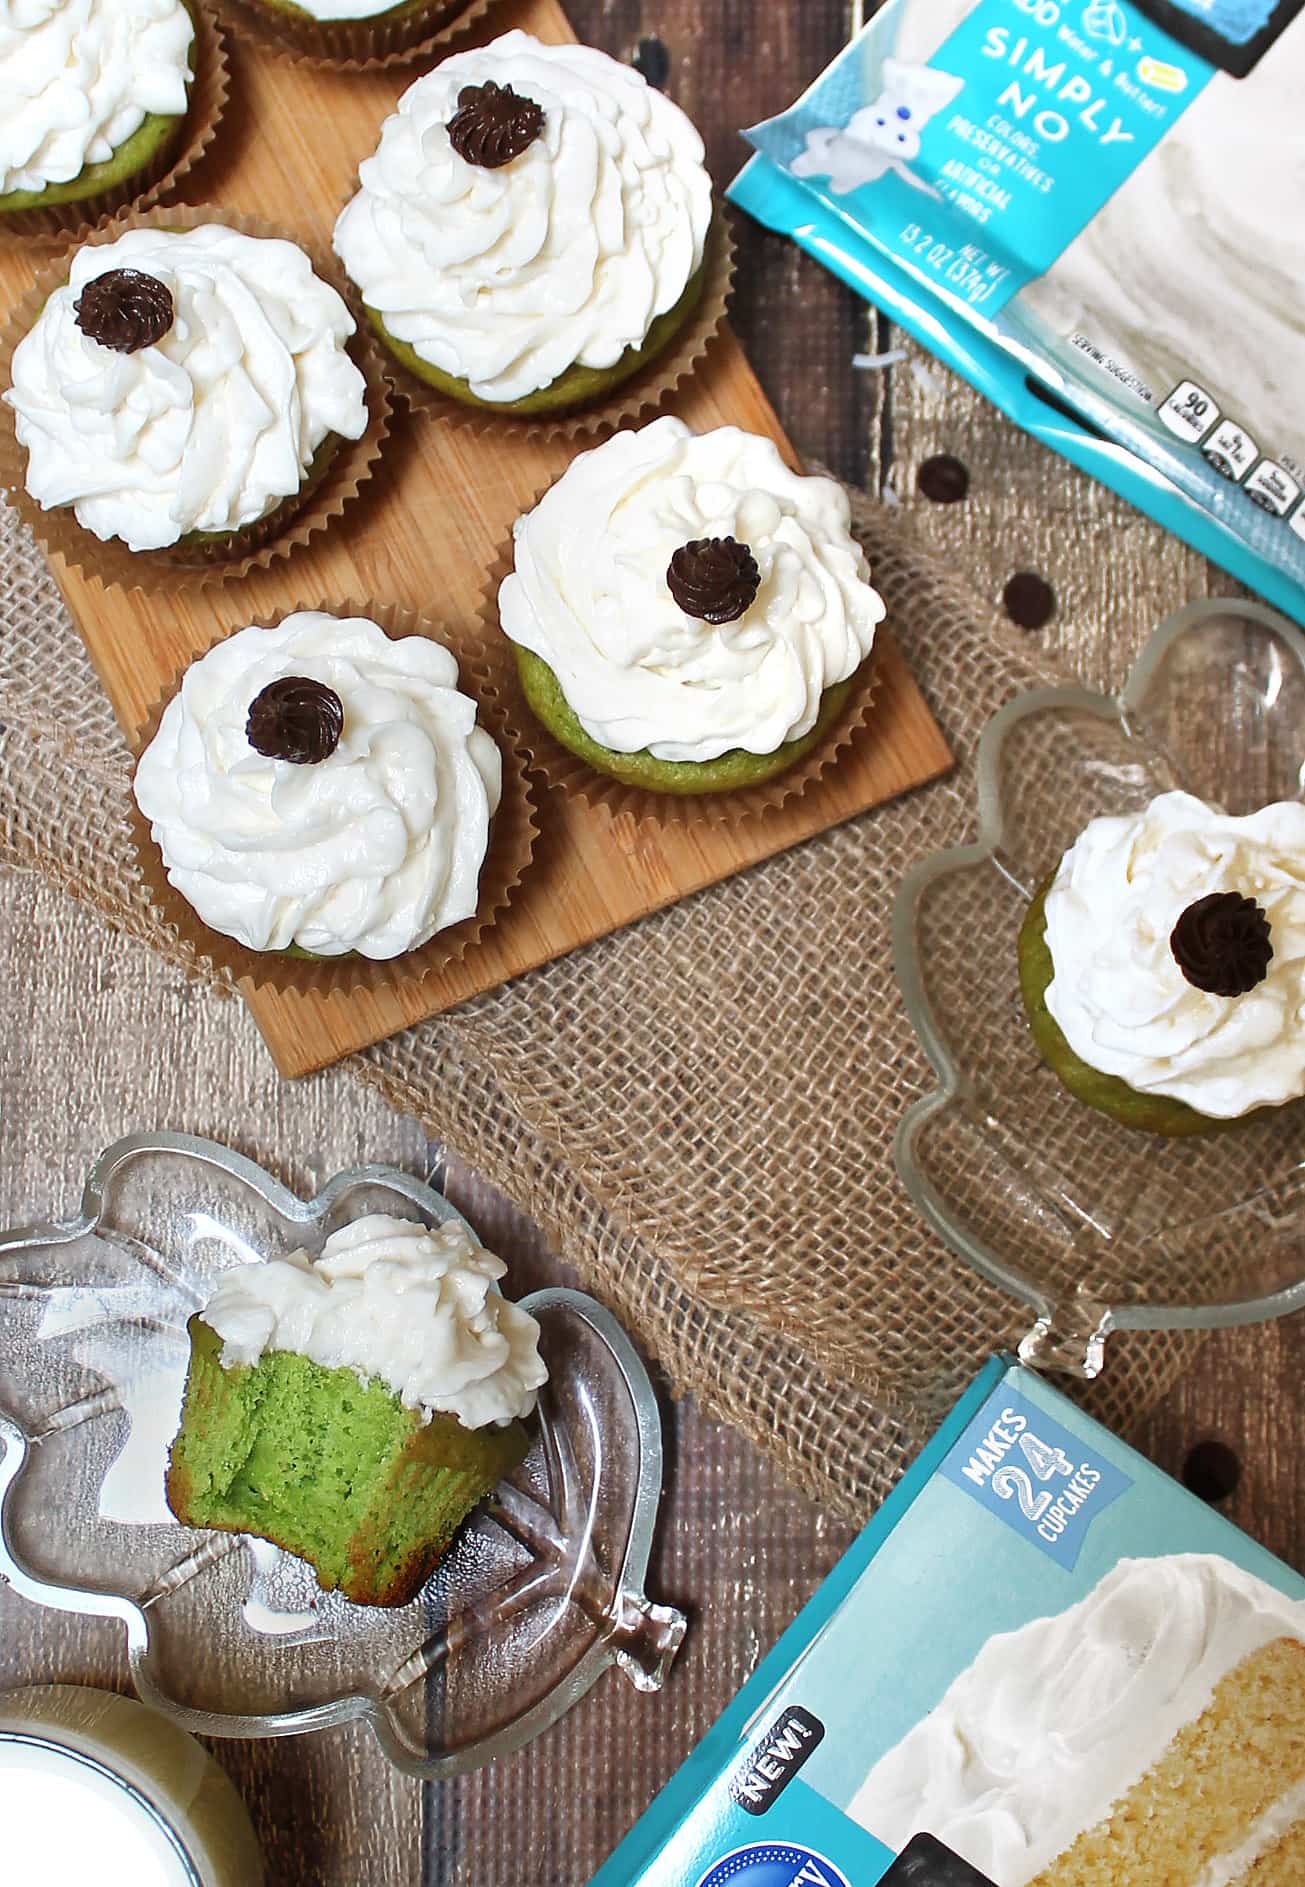 Green Smoothie Cupcakes